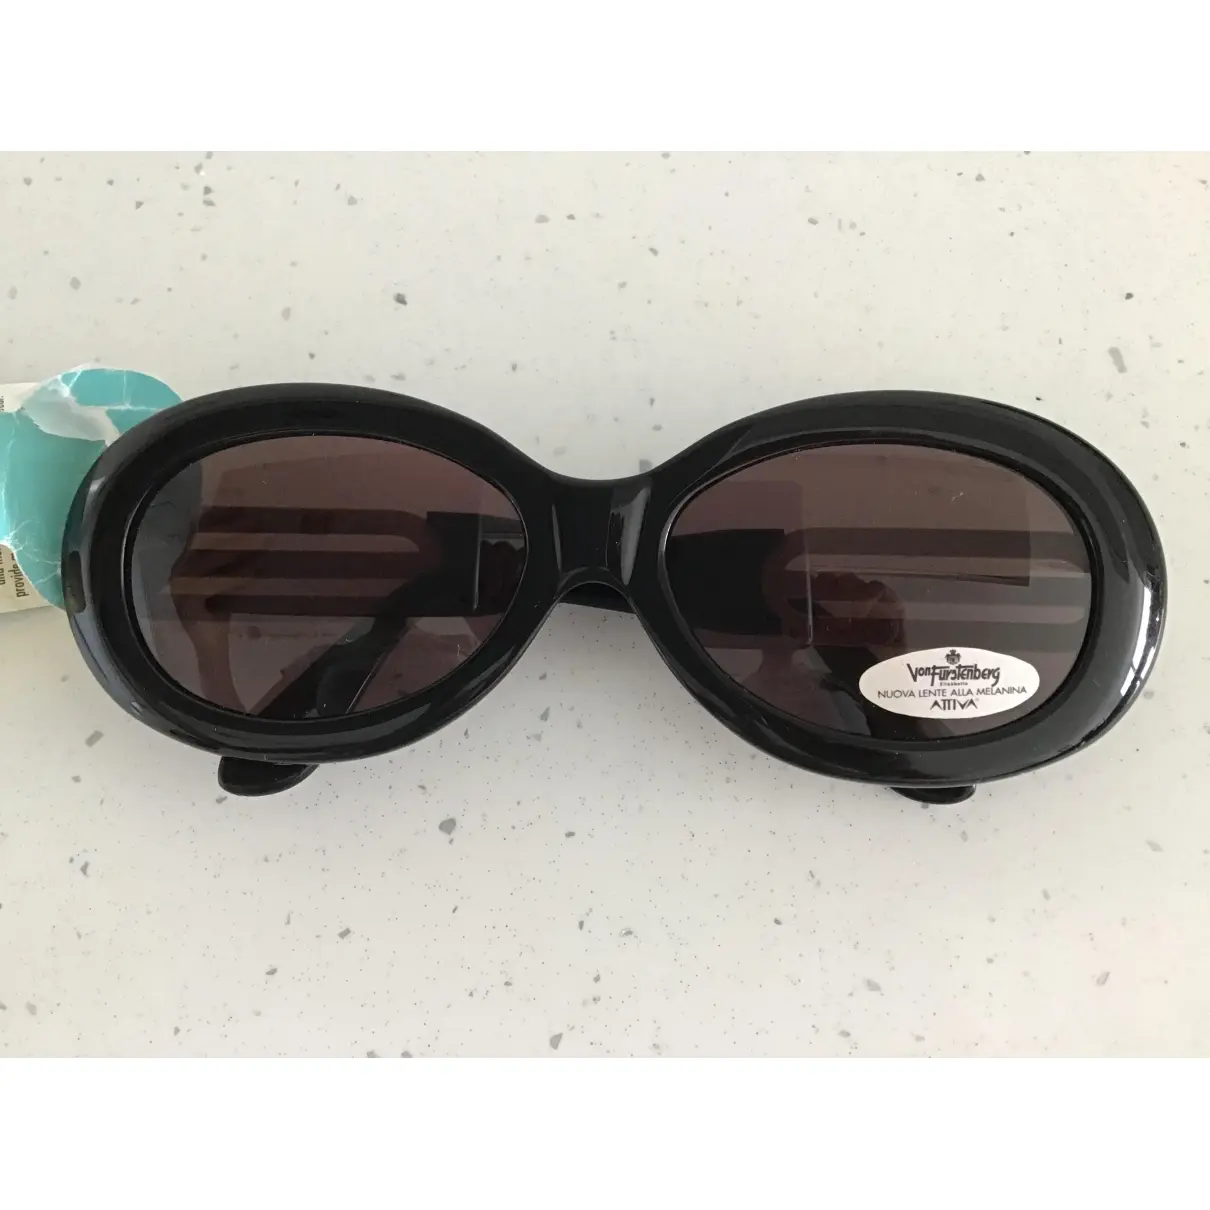 Diane Von Furstenberg Oversized sunglasses for sale - Vintage